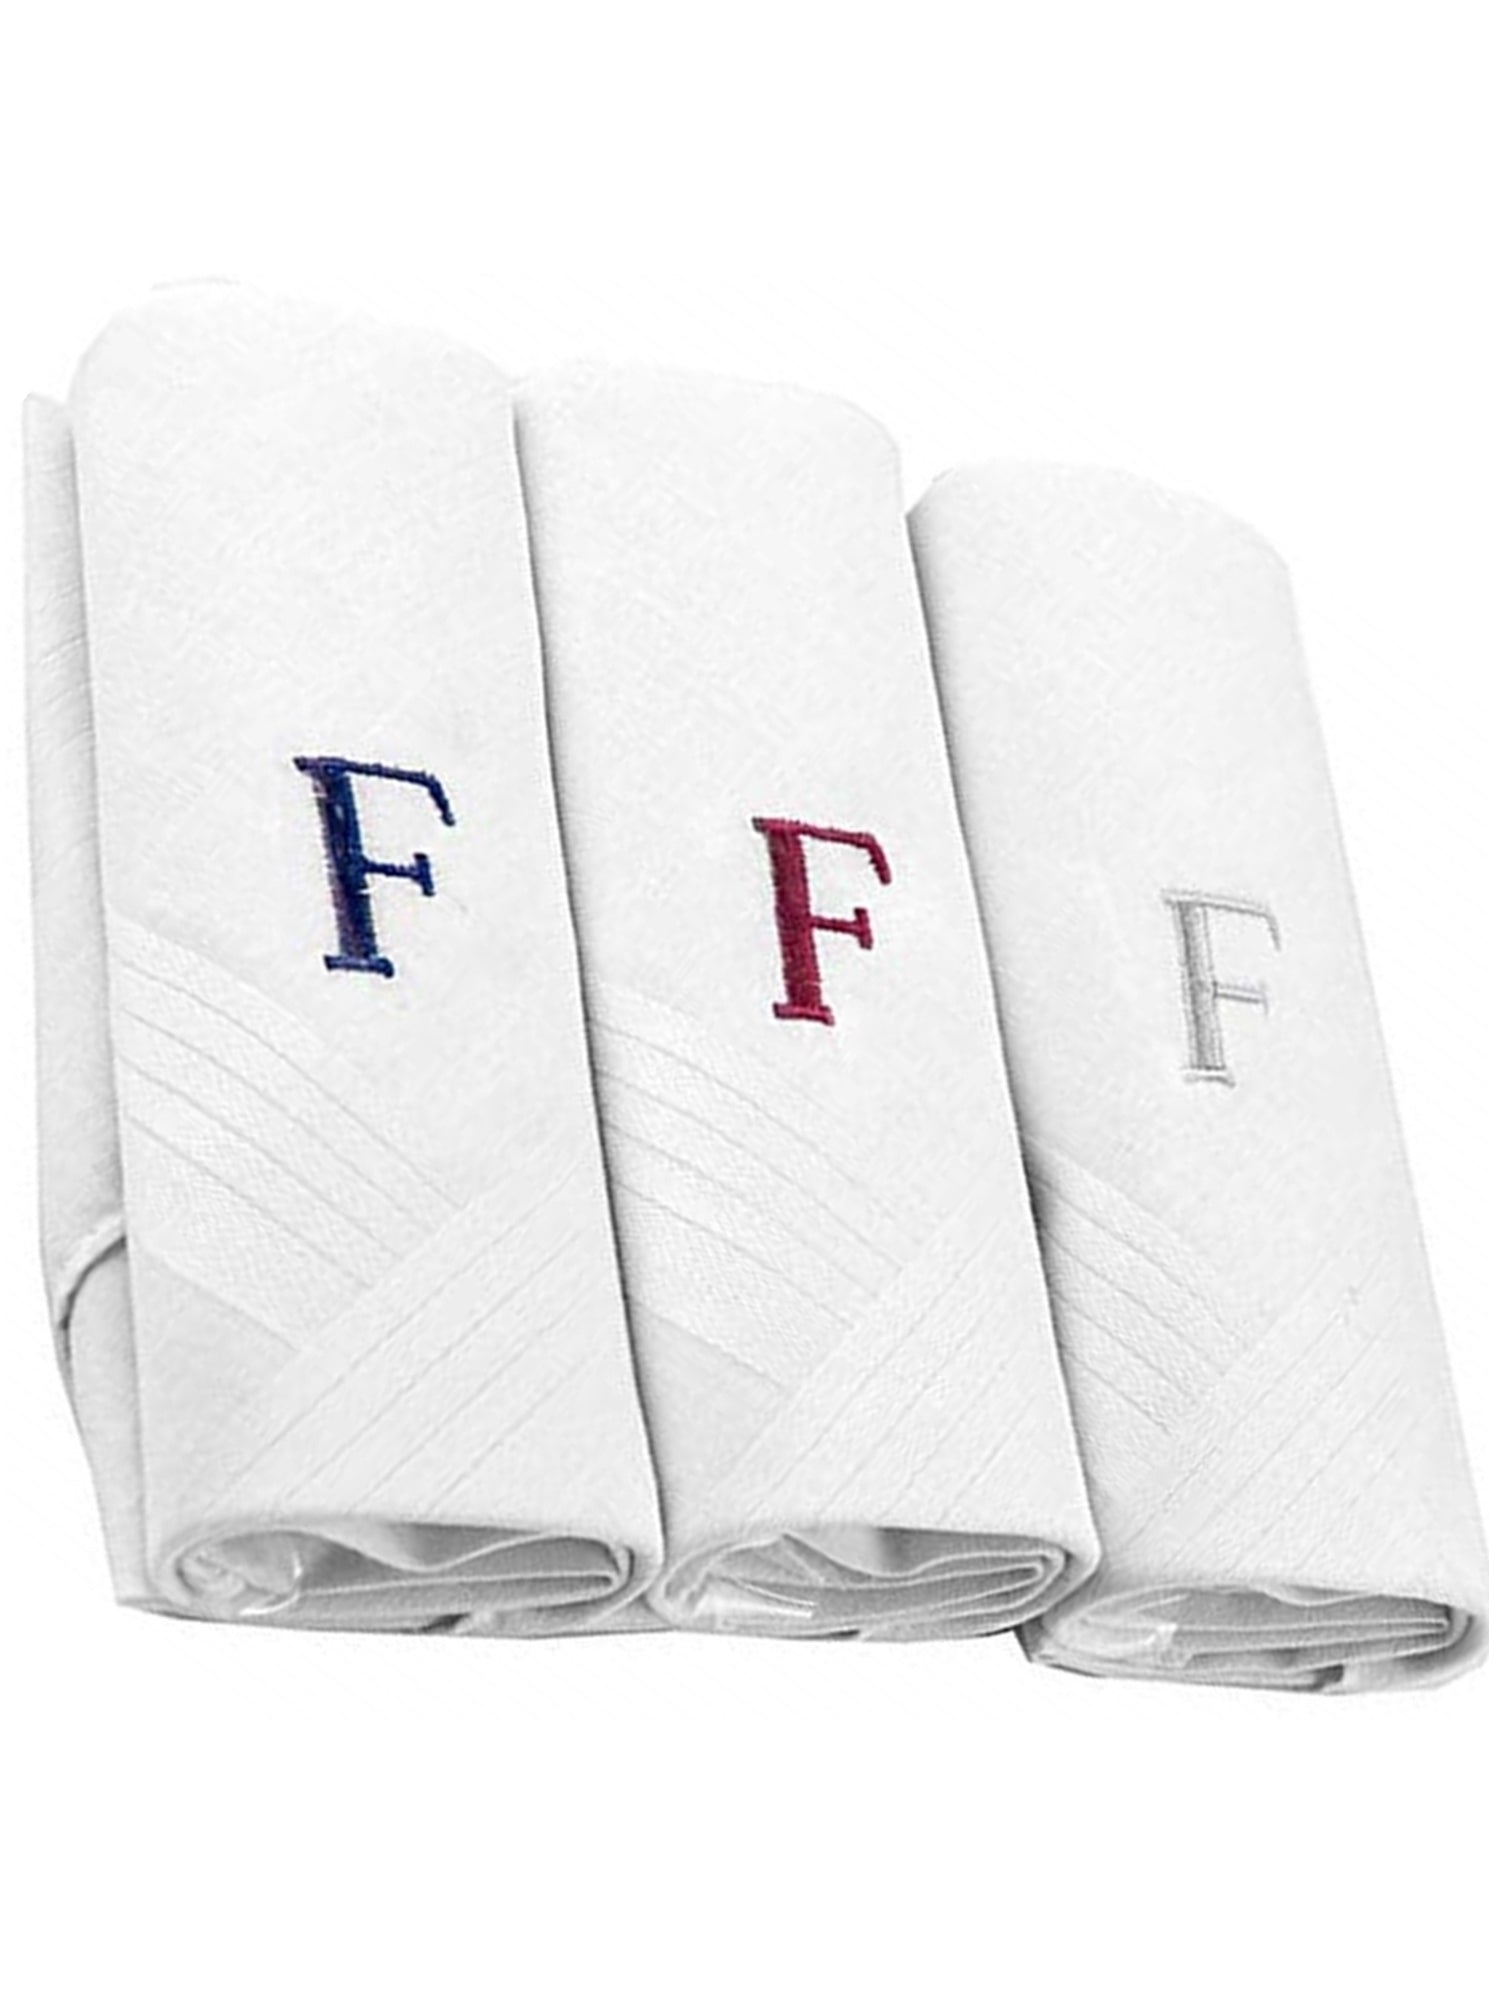 Men's Cotton Monogrammed Handkerchiefs Initial Letter Hanky Handkerchiefs TheDapperTie White F 2 x 3 Pack  